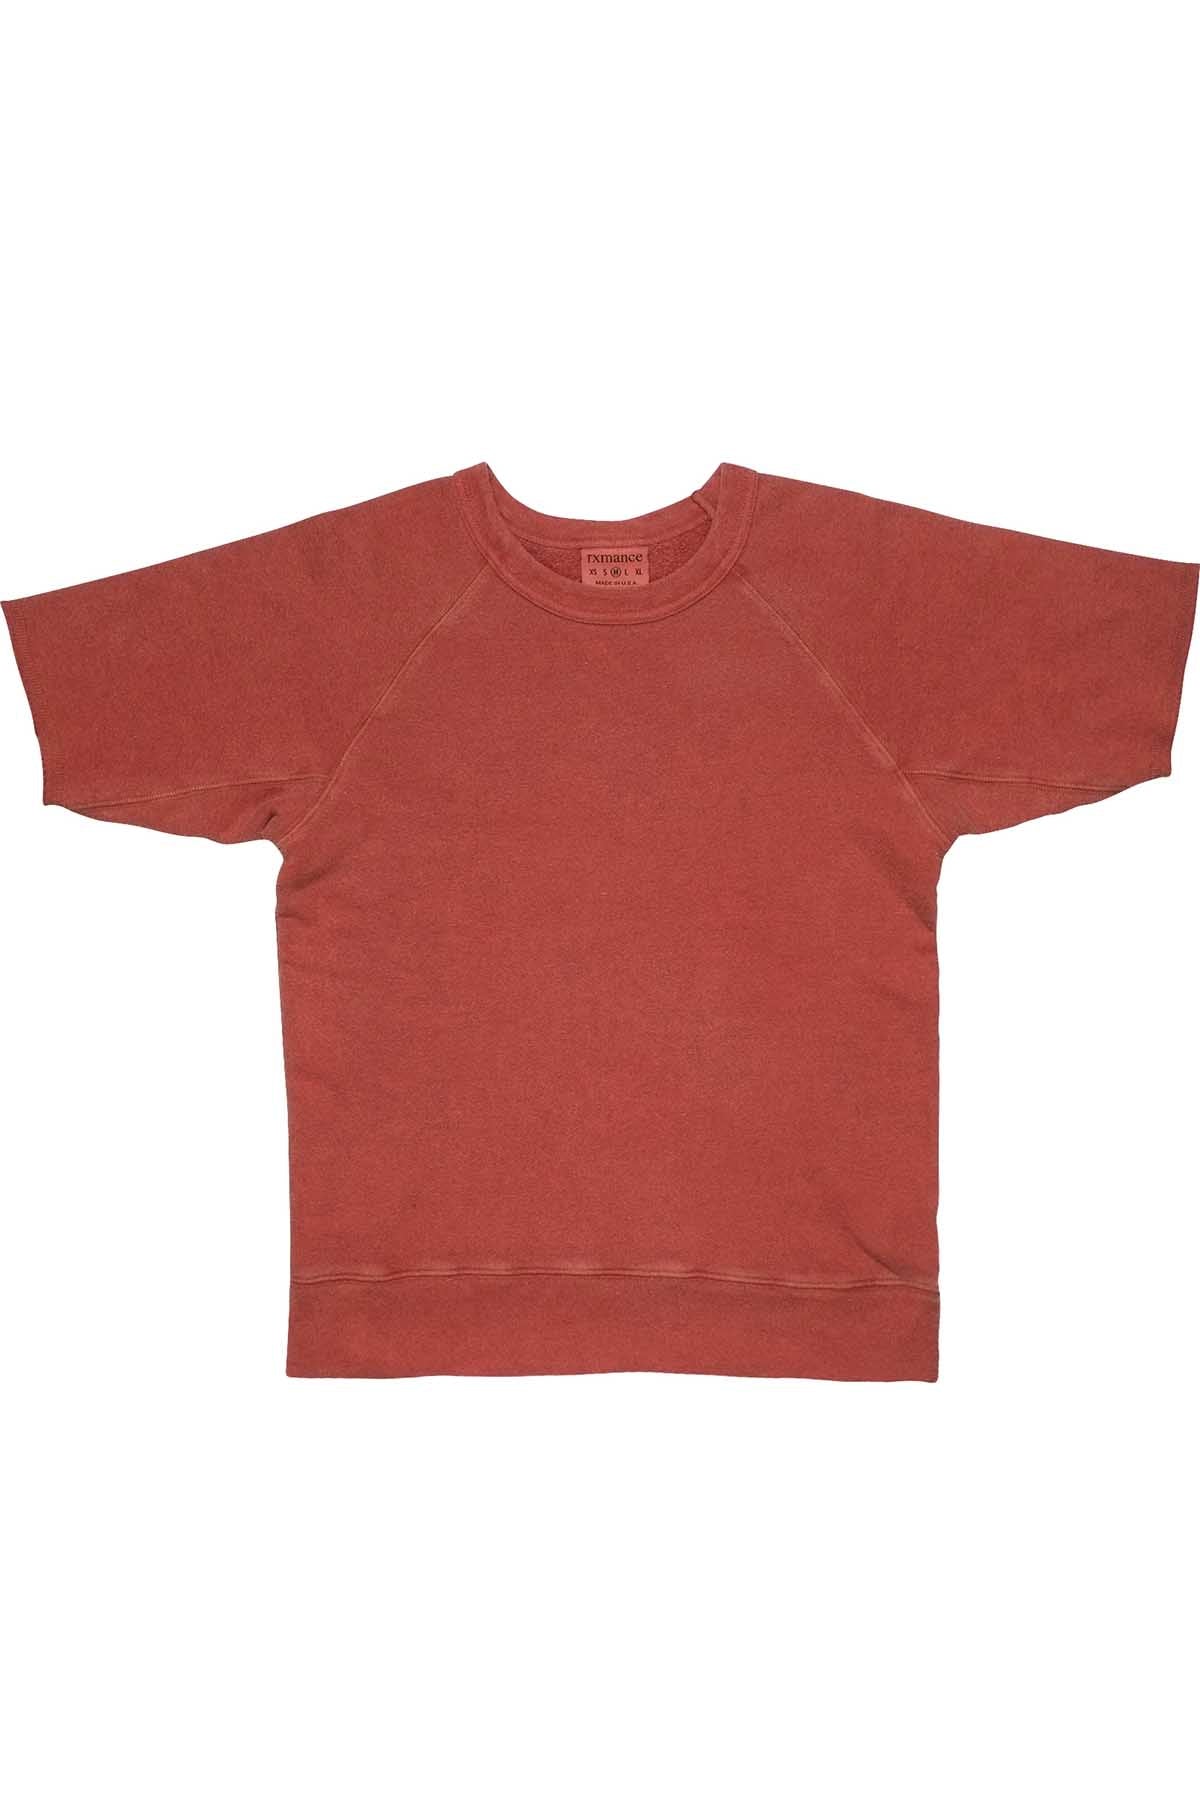 Rxmance Unisex Redwood Short Sleeve Sweatshirt